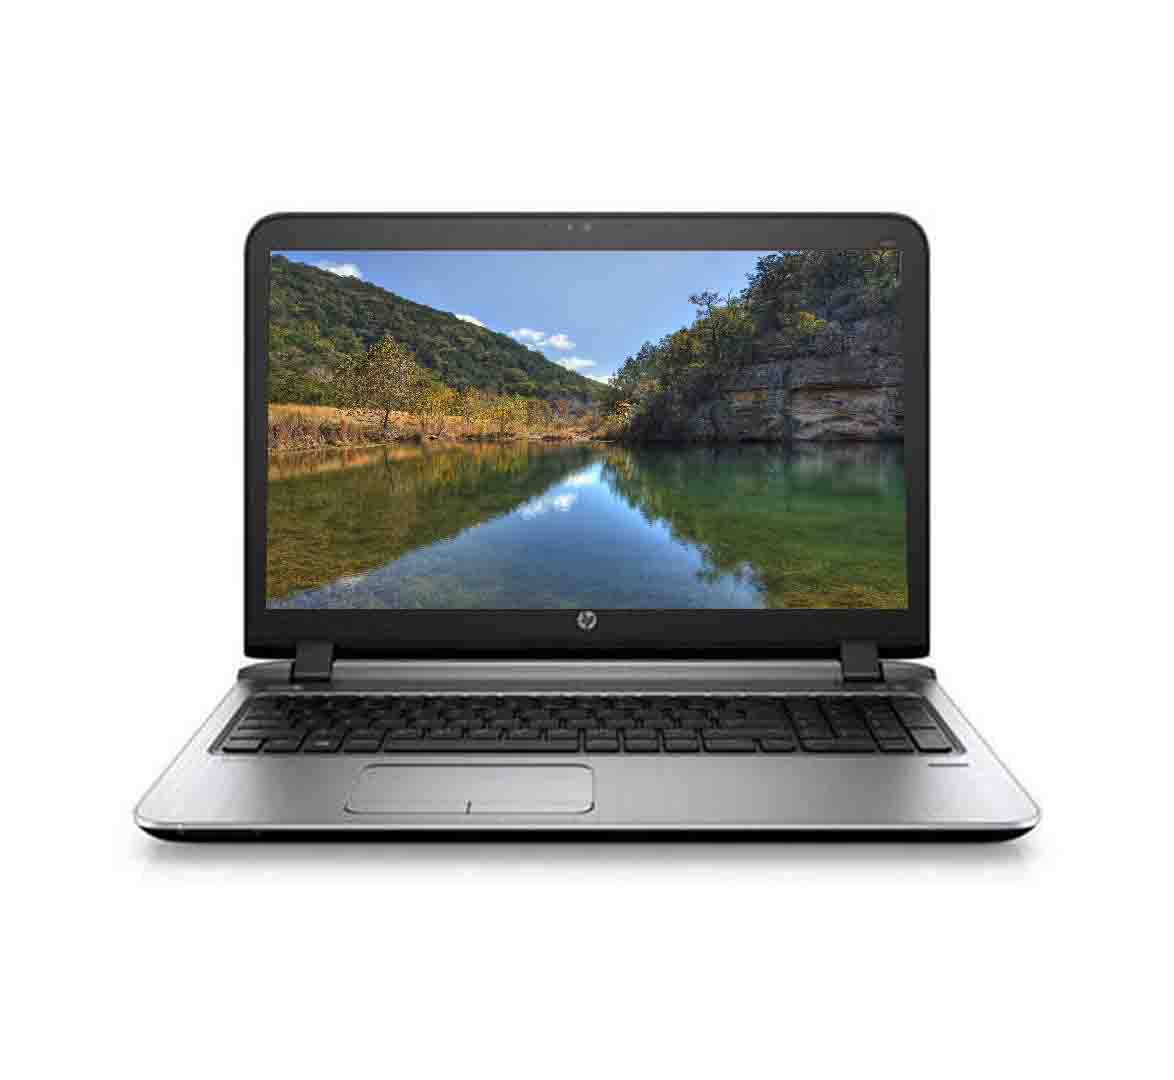 HP ProBook 450 G3 Business Laptop, Intel Core i5-6th Generation